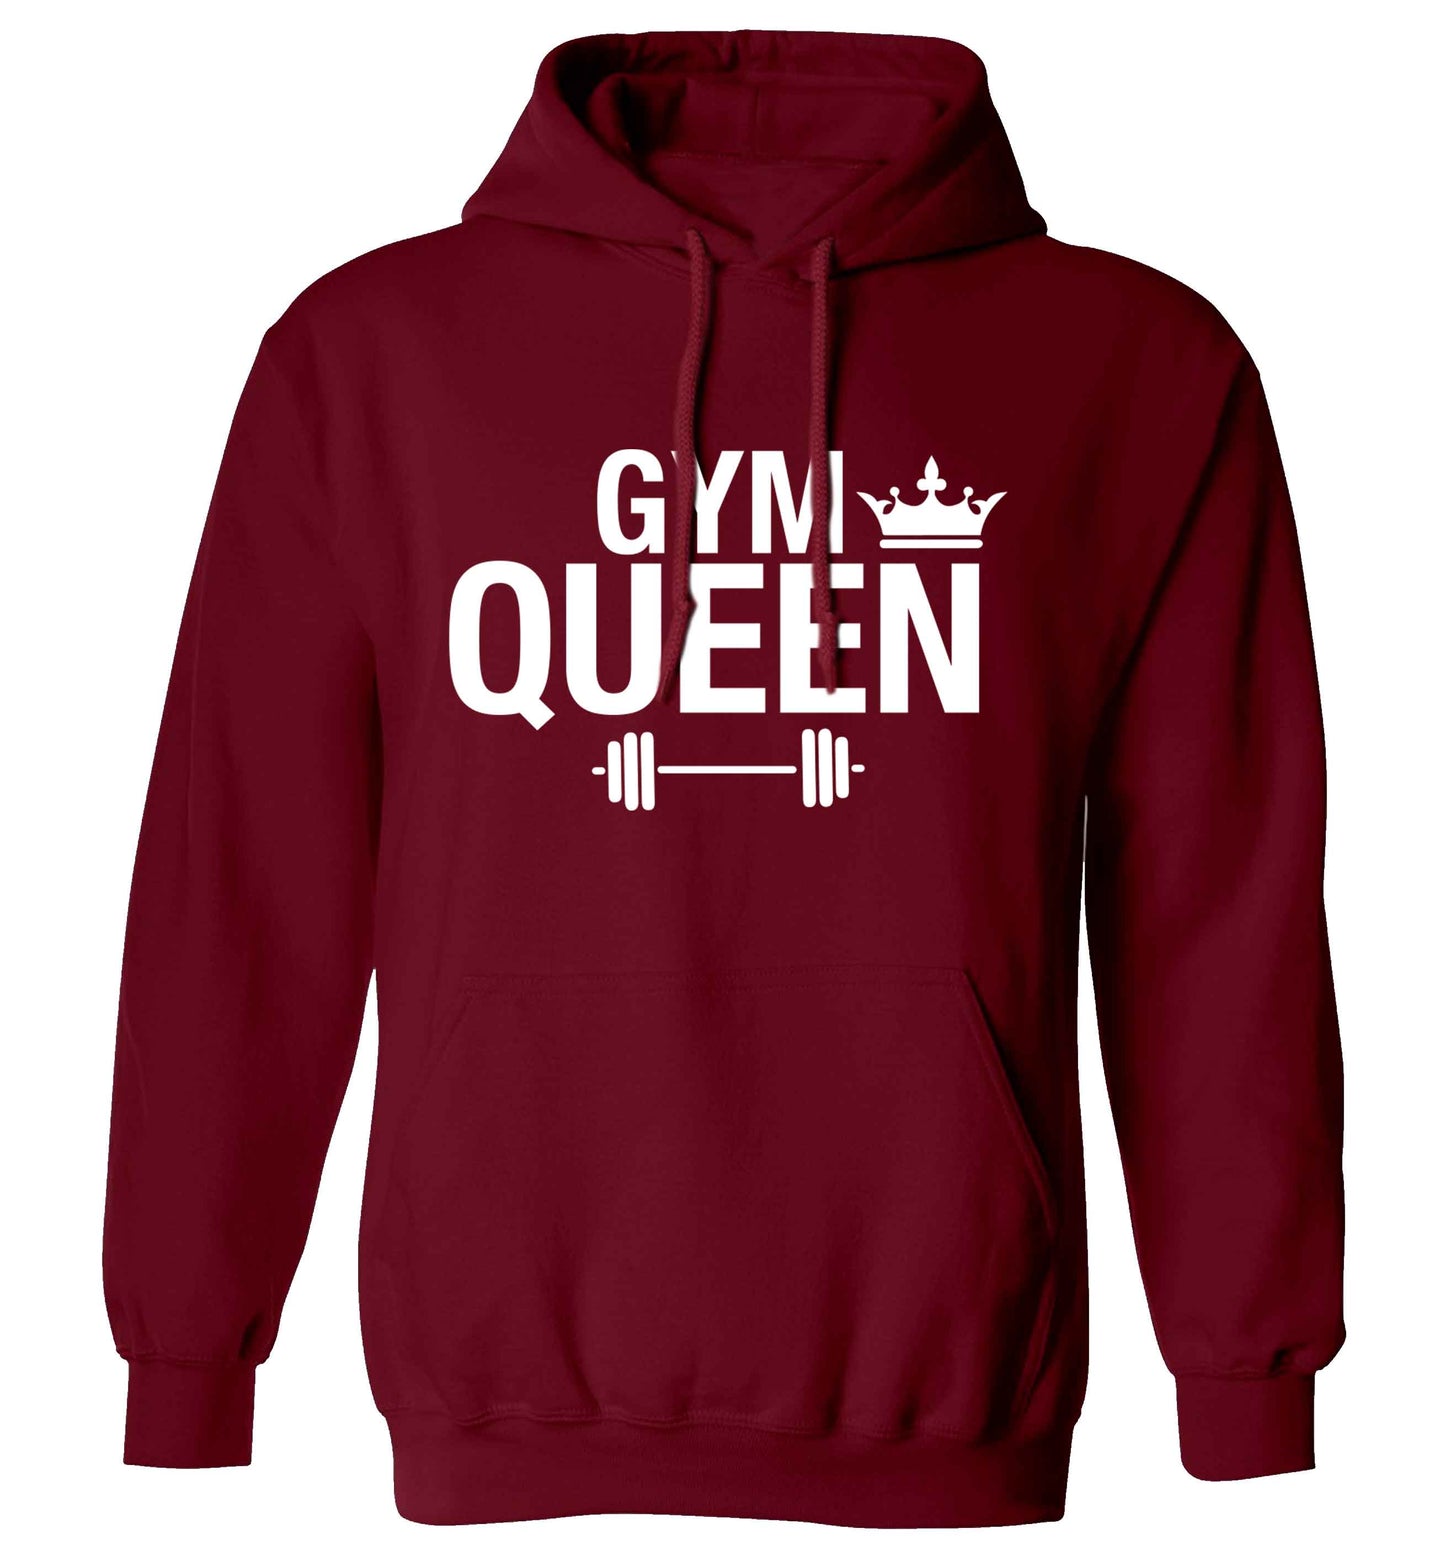 Gym queen adults unisex maroon hoodie 2XL